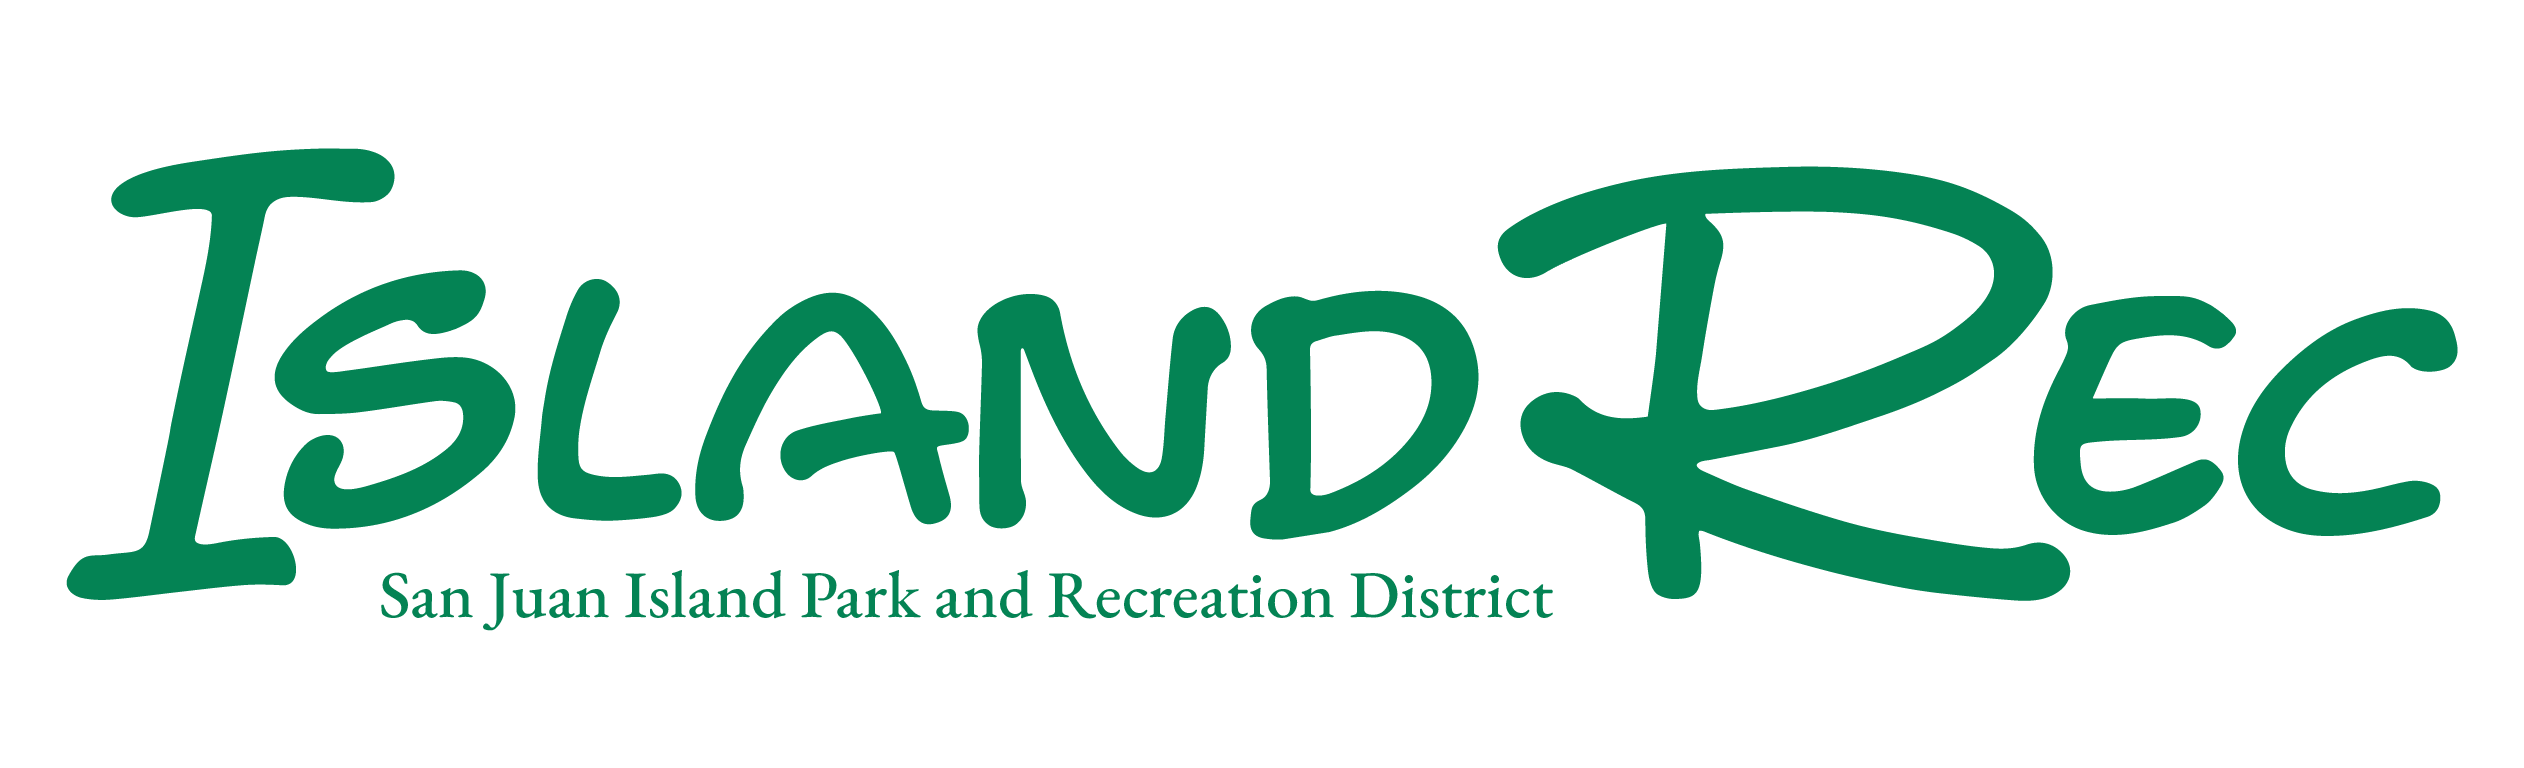 Island Rec, San Juan Island Park and Recreation District